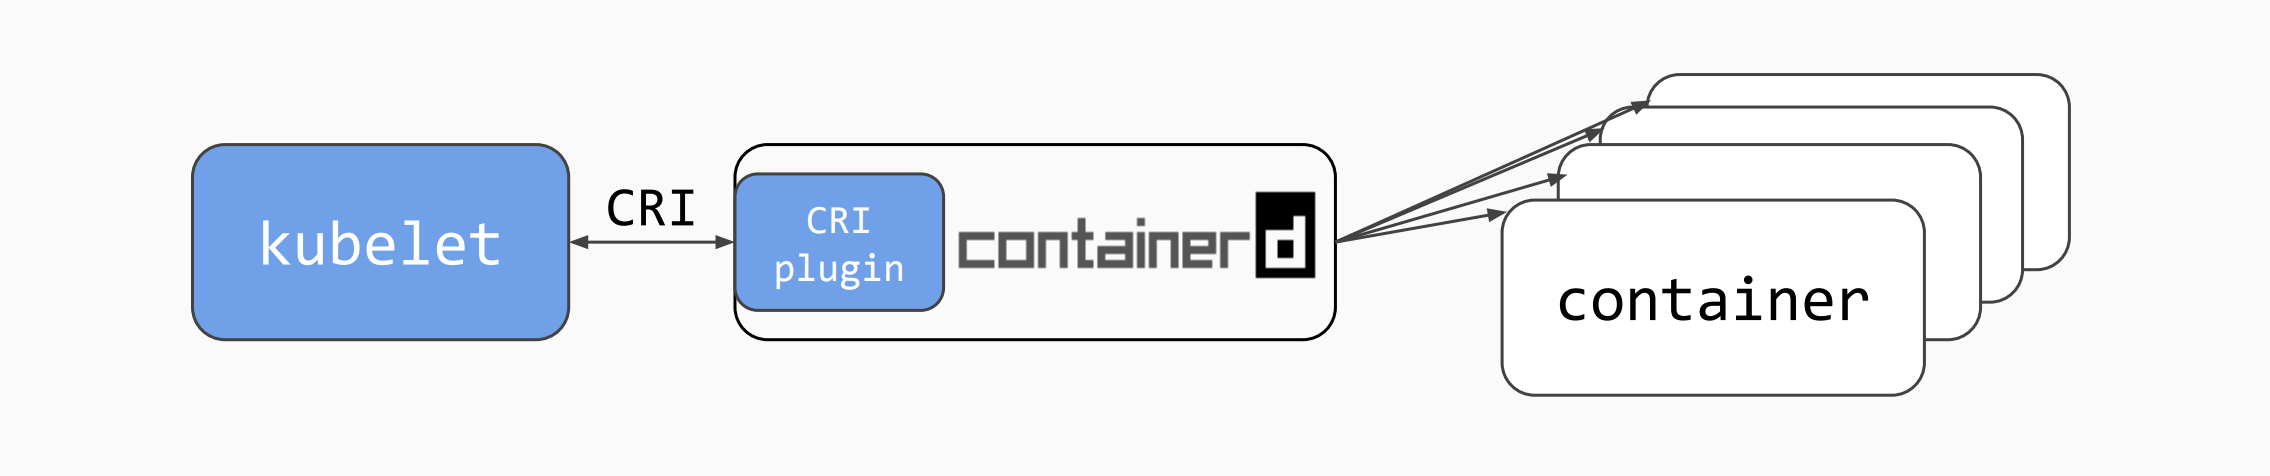 containerd container runtime